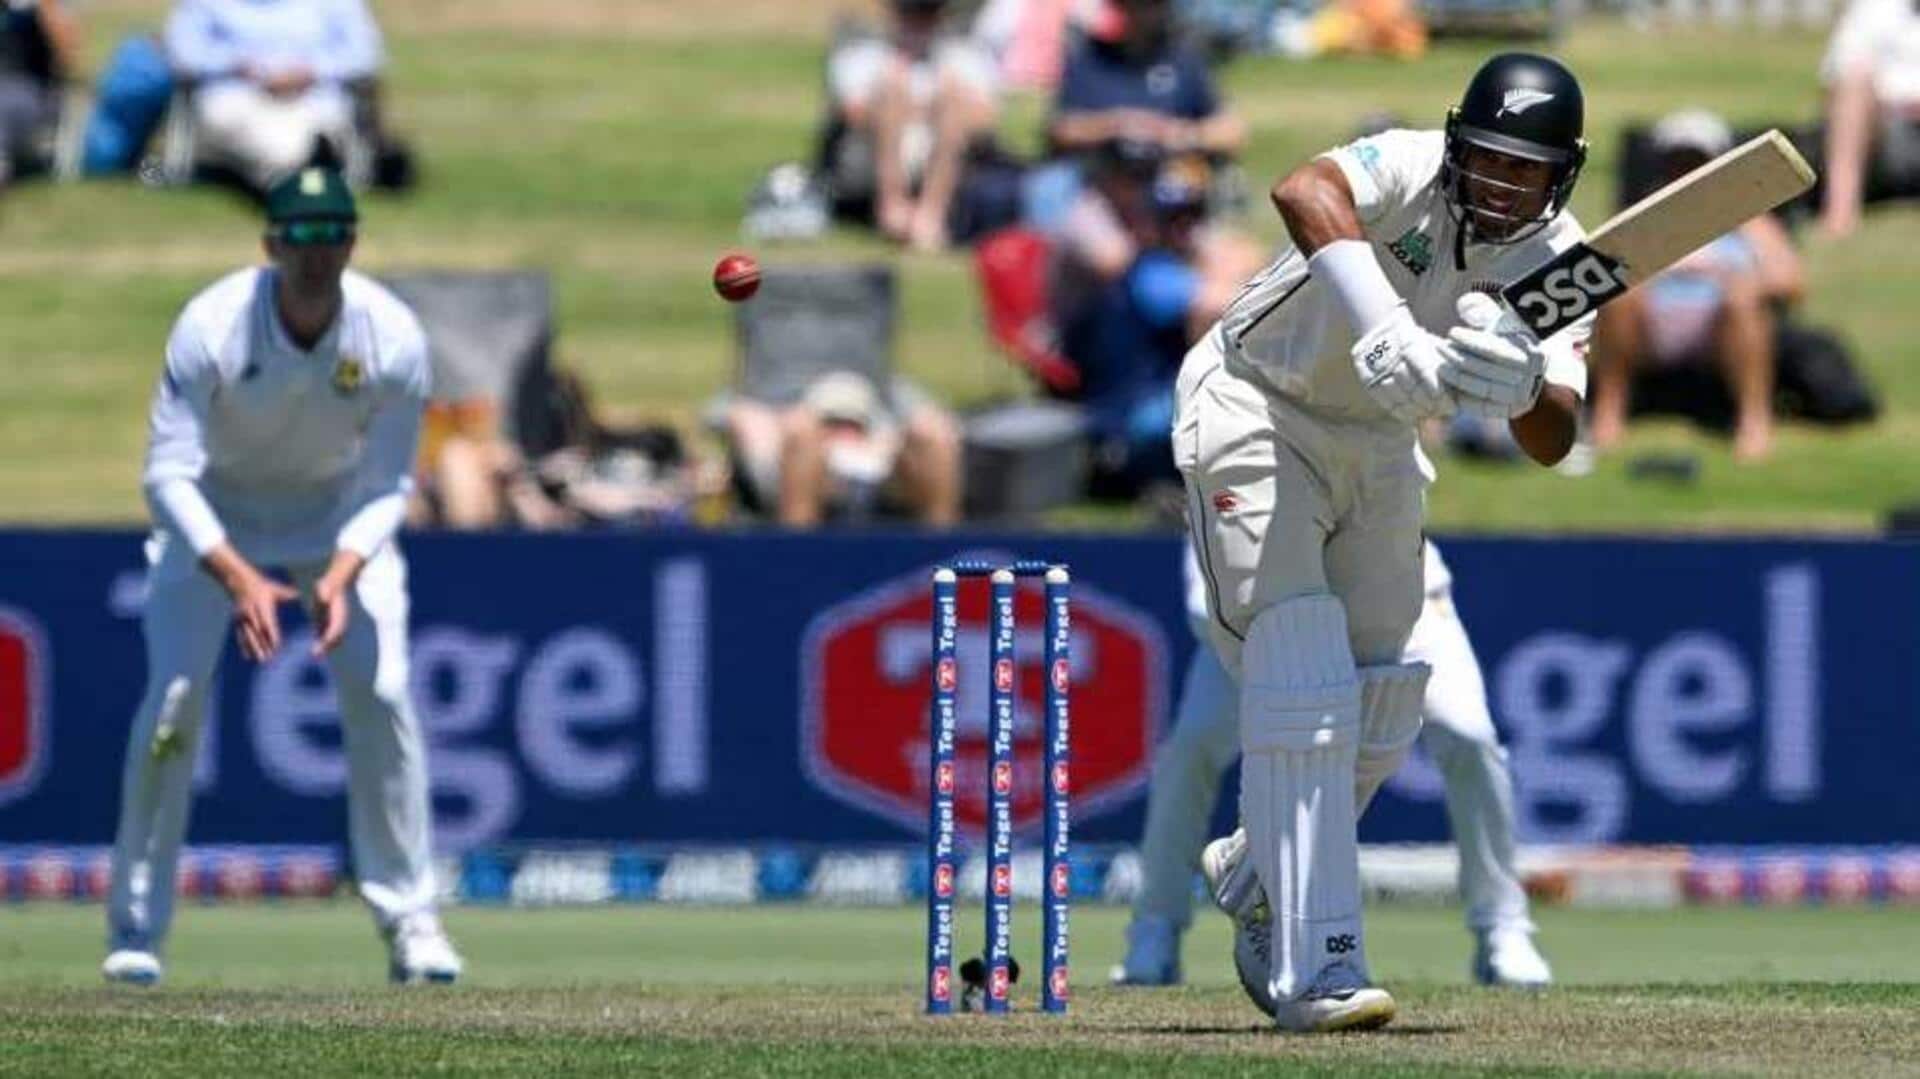 Rachin Ravindra celebrates Test comeback with maiden century: Stats